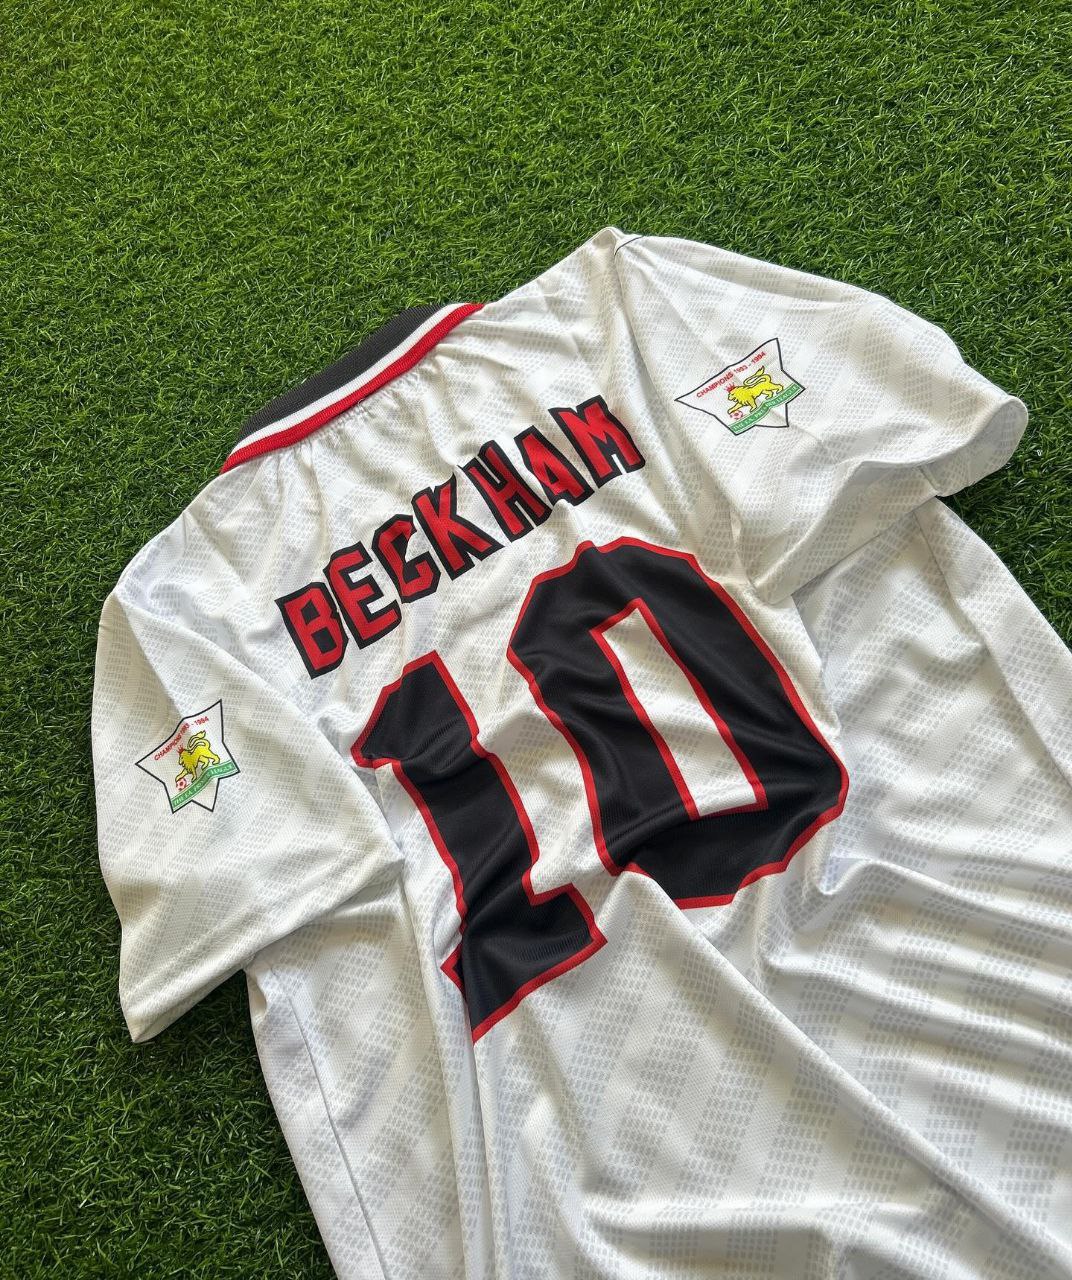 David Beckham Manchester United White Retro Jersey